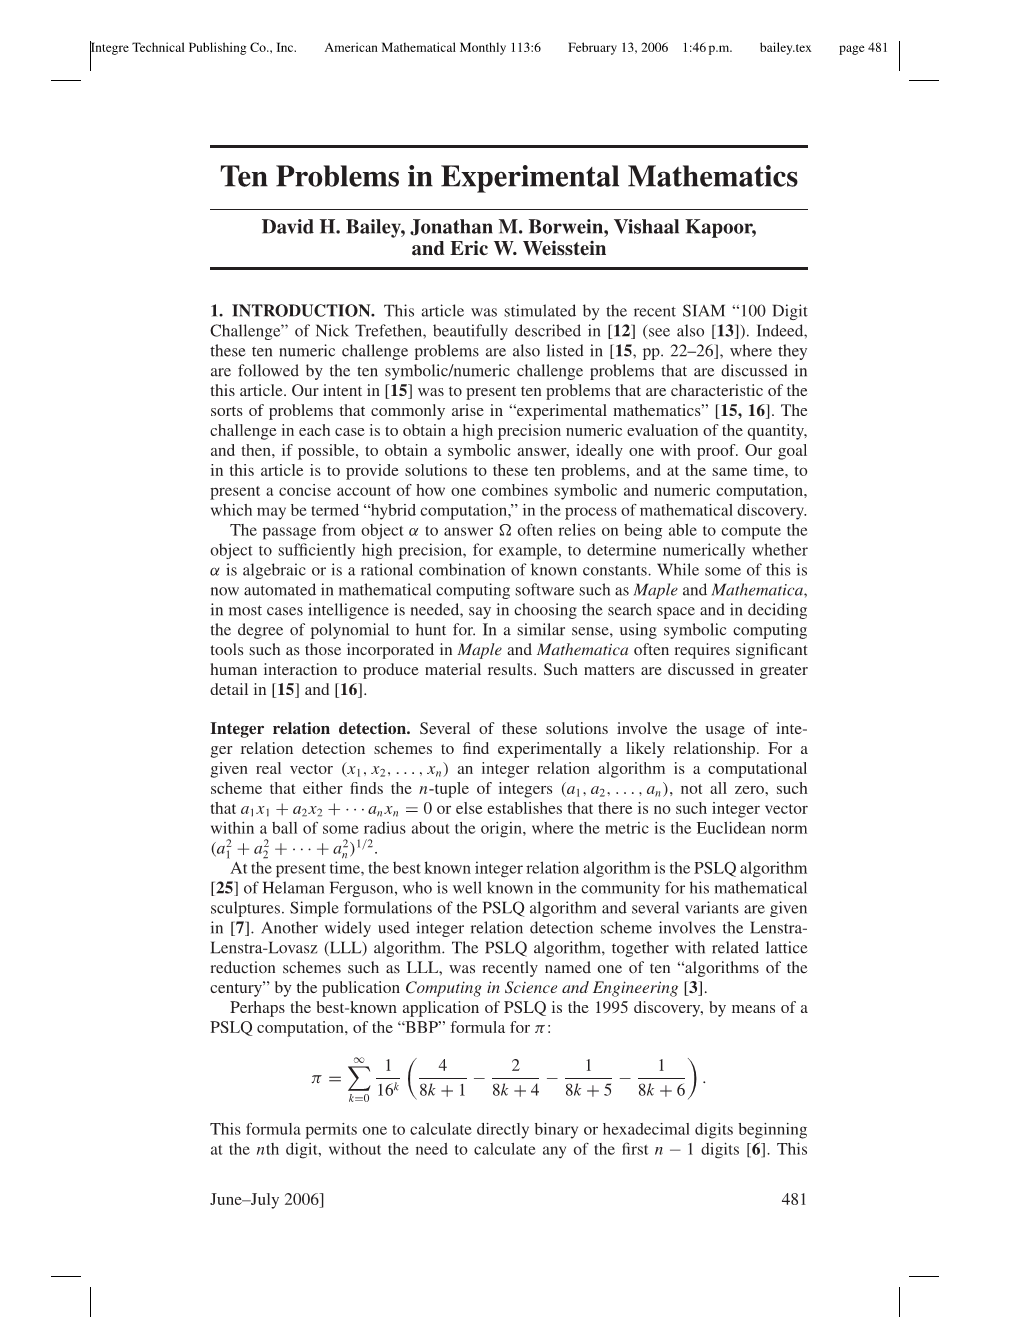 Ten Problems in Experimental Mathematics